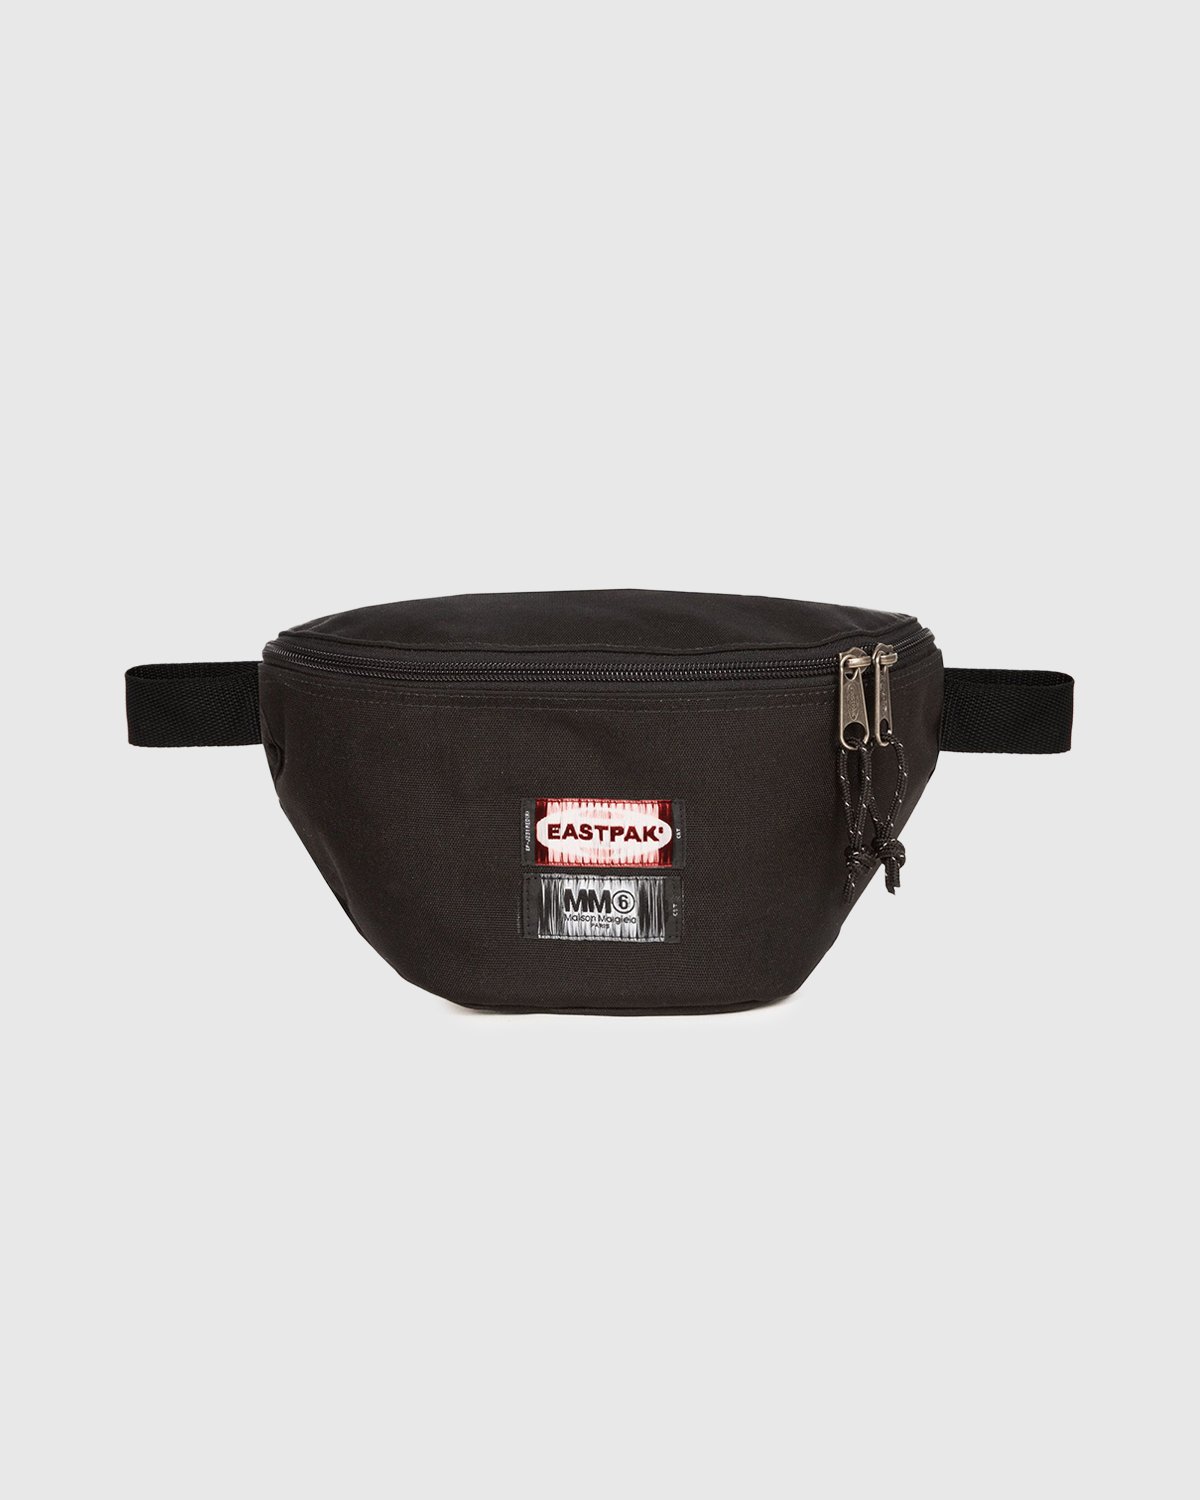 MM6 Maison Margiela x Eastpak - Belt Bag Black - Accessories - Black - Image 1